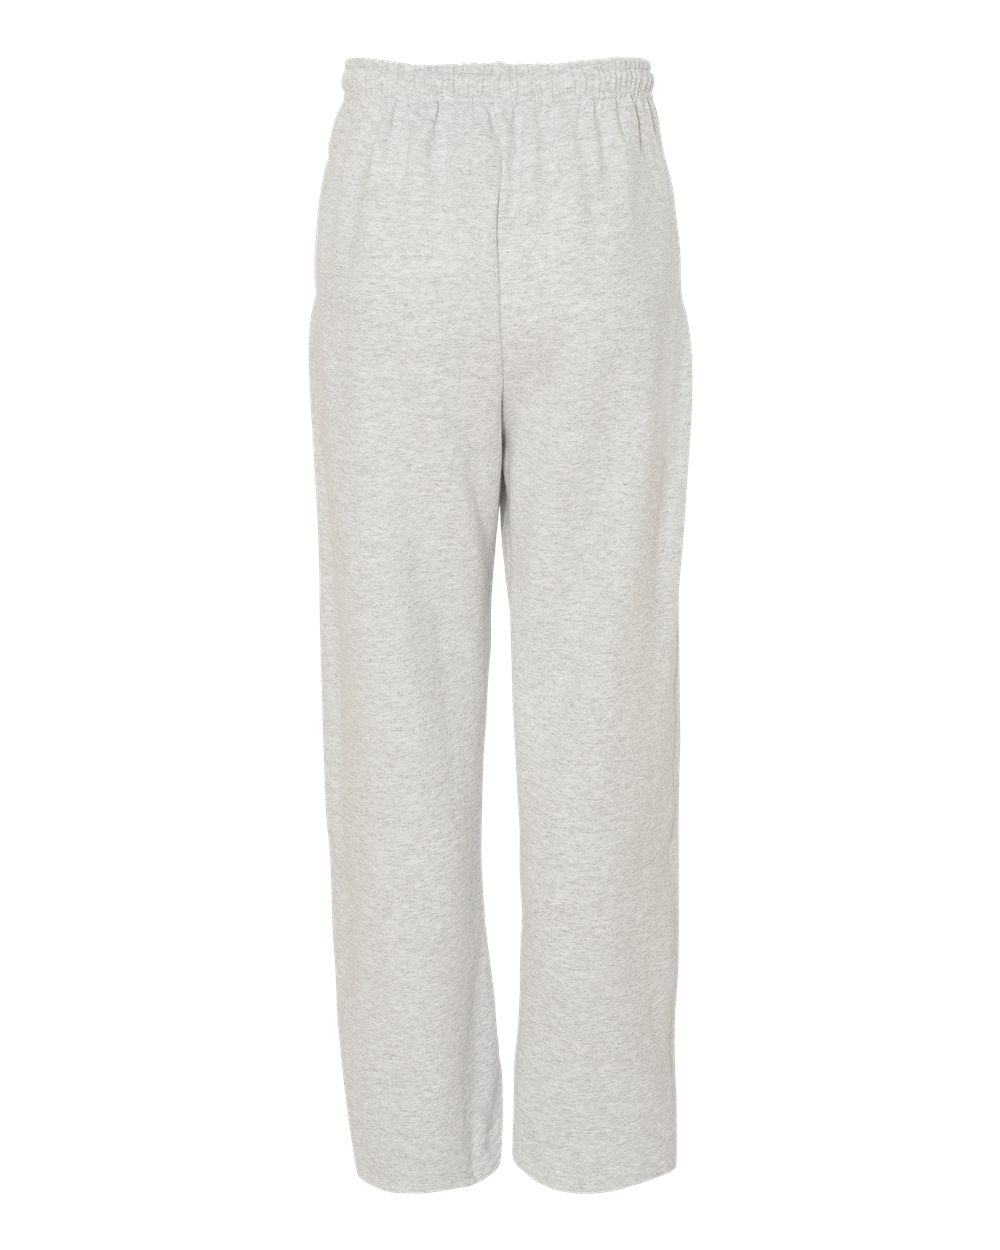 Men's Fleece Open/ Elastic Bottom Pocketed Sweatpants, up to Size 2XL